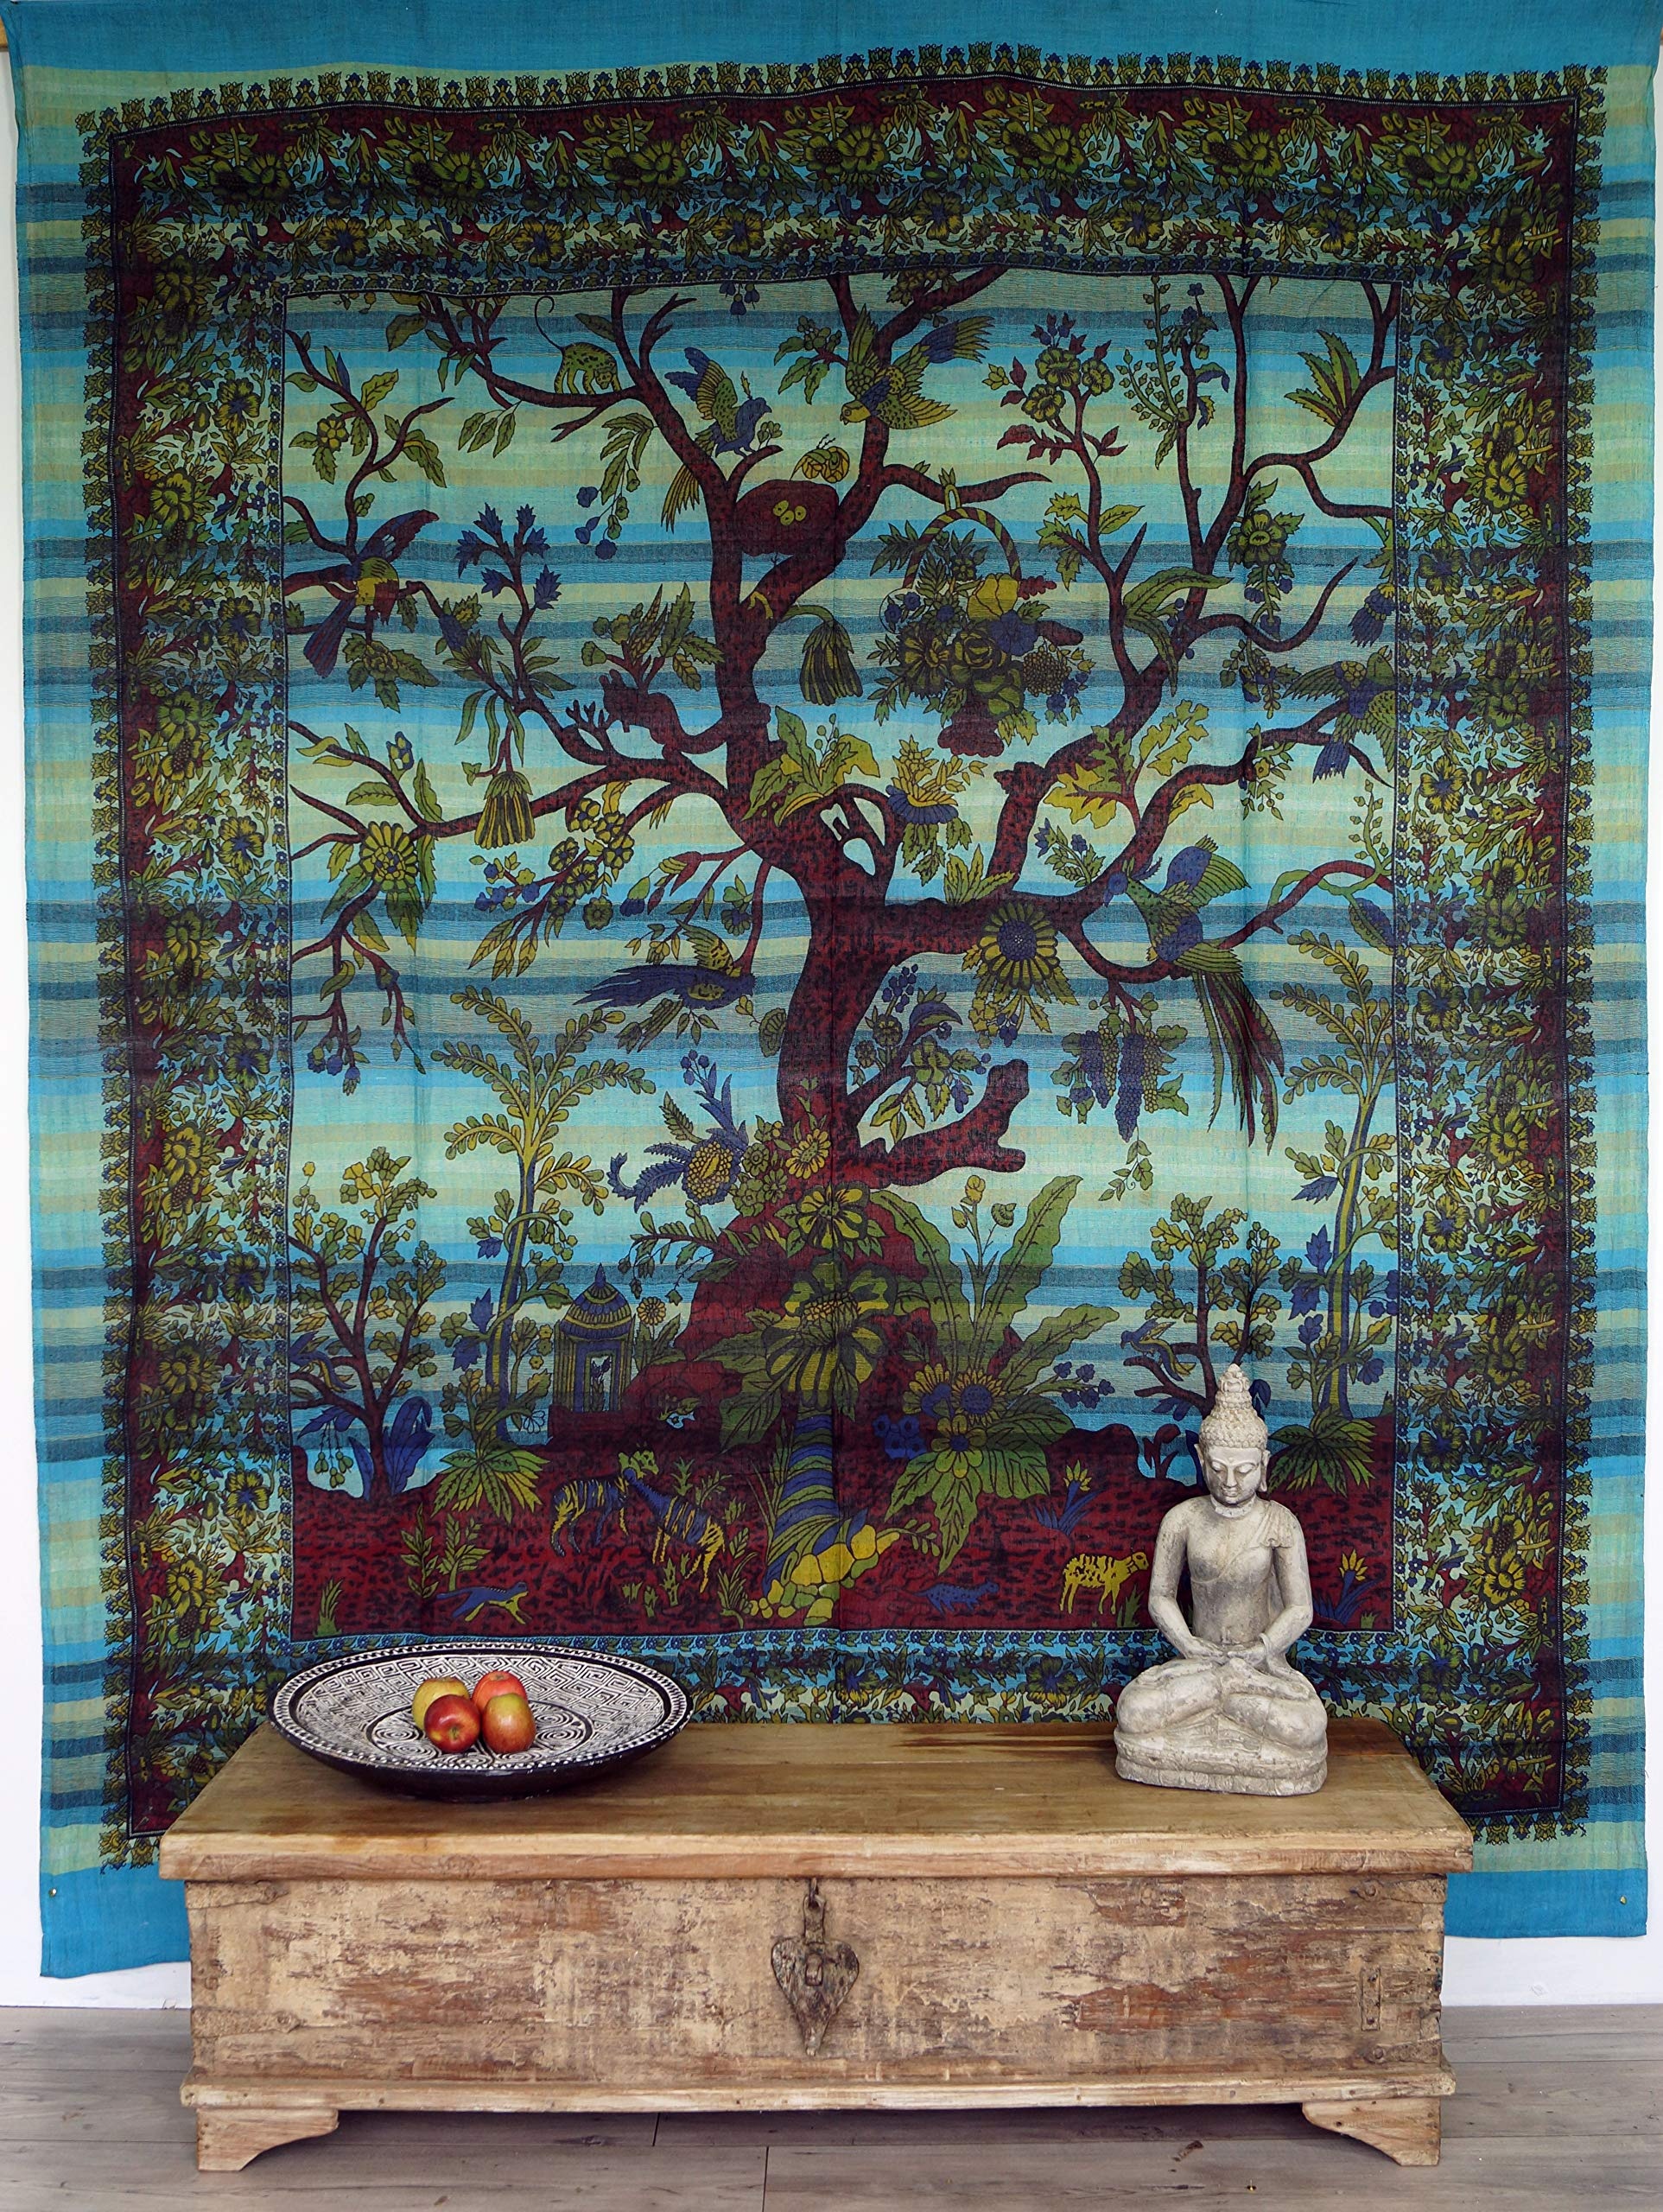 GURU SHOP Boho-Style Wandbehang, Indische Tagesdecke Lebensbaum/Tree of Life - Türkis, Baumwolle, 250x210x0,2 cm, Bettüberwurf, Sofa Überwurf